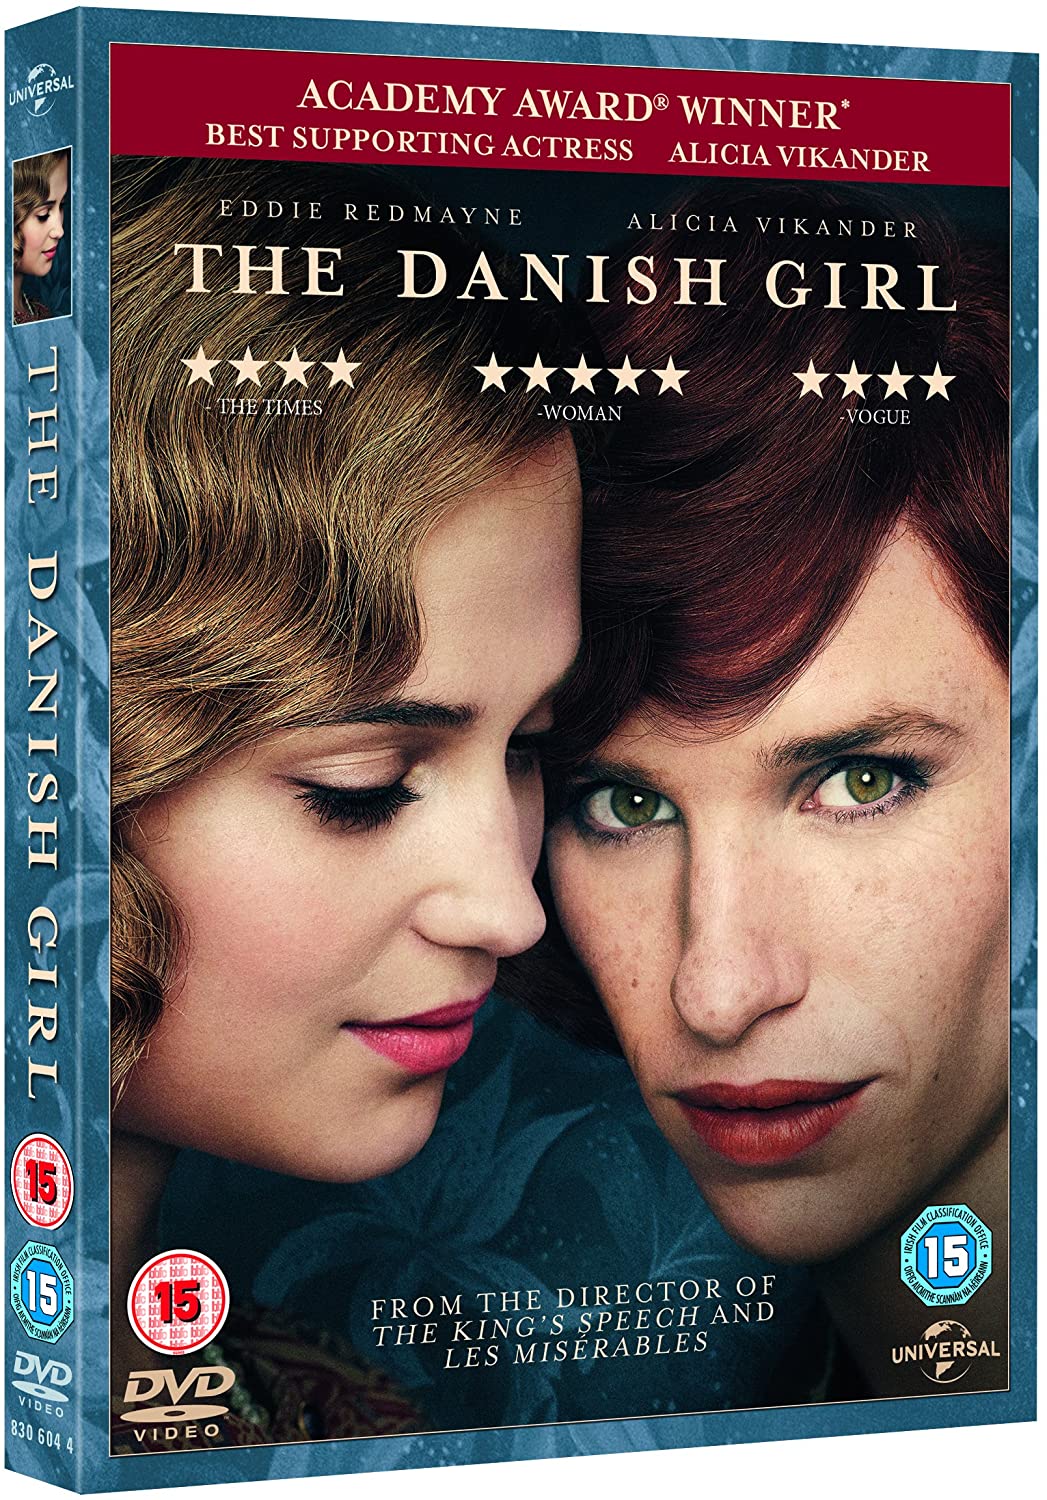 The Danish Girl [2015] - Drama/Romance [DVD]